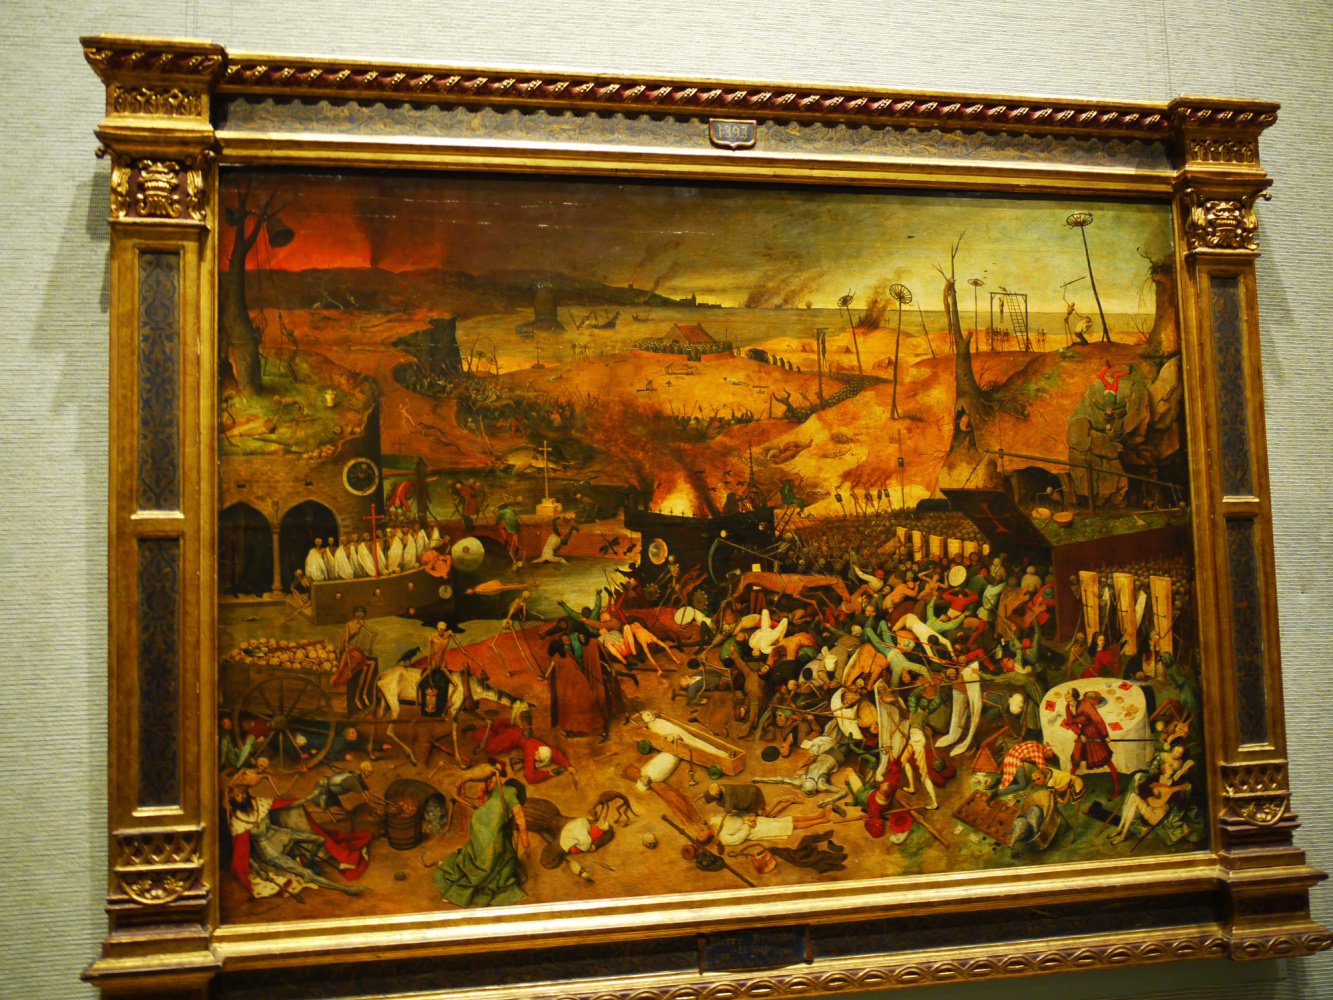 "The Triumph of Death" by Pieter Bruegel the Elder restored and presented in the Museo del Prado